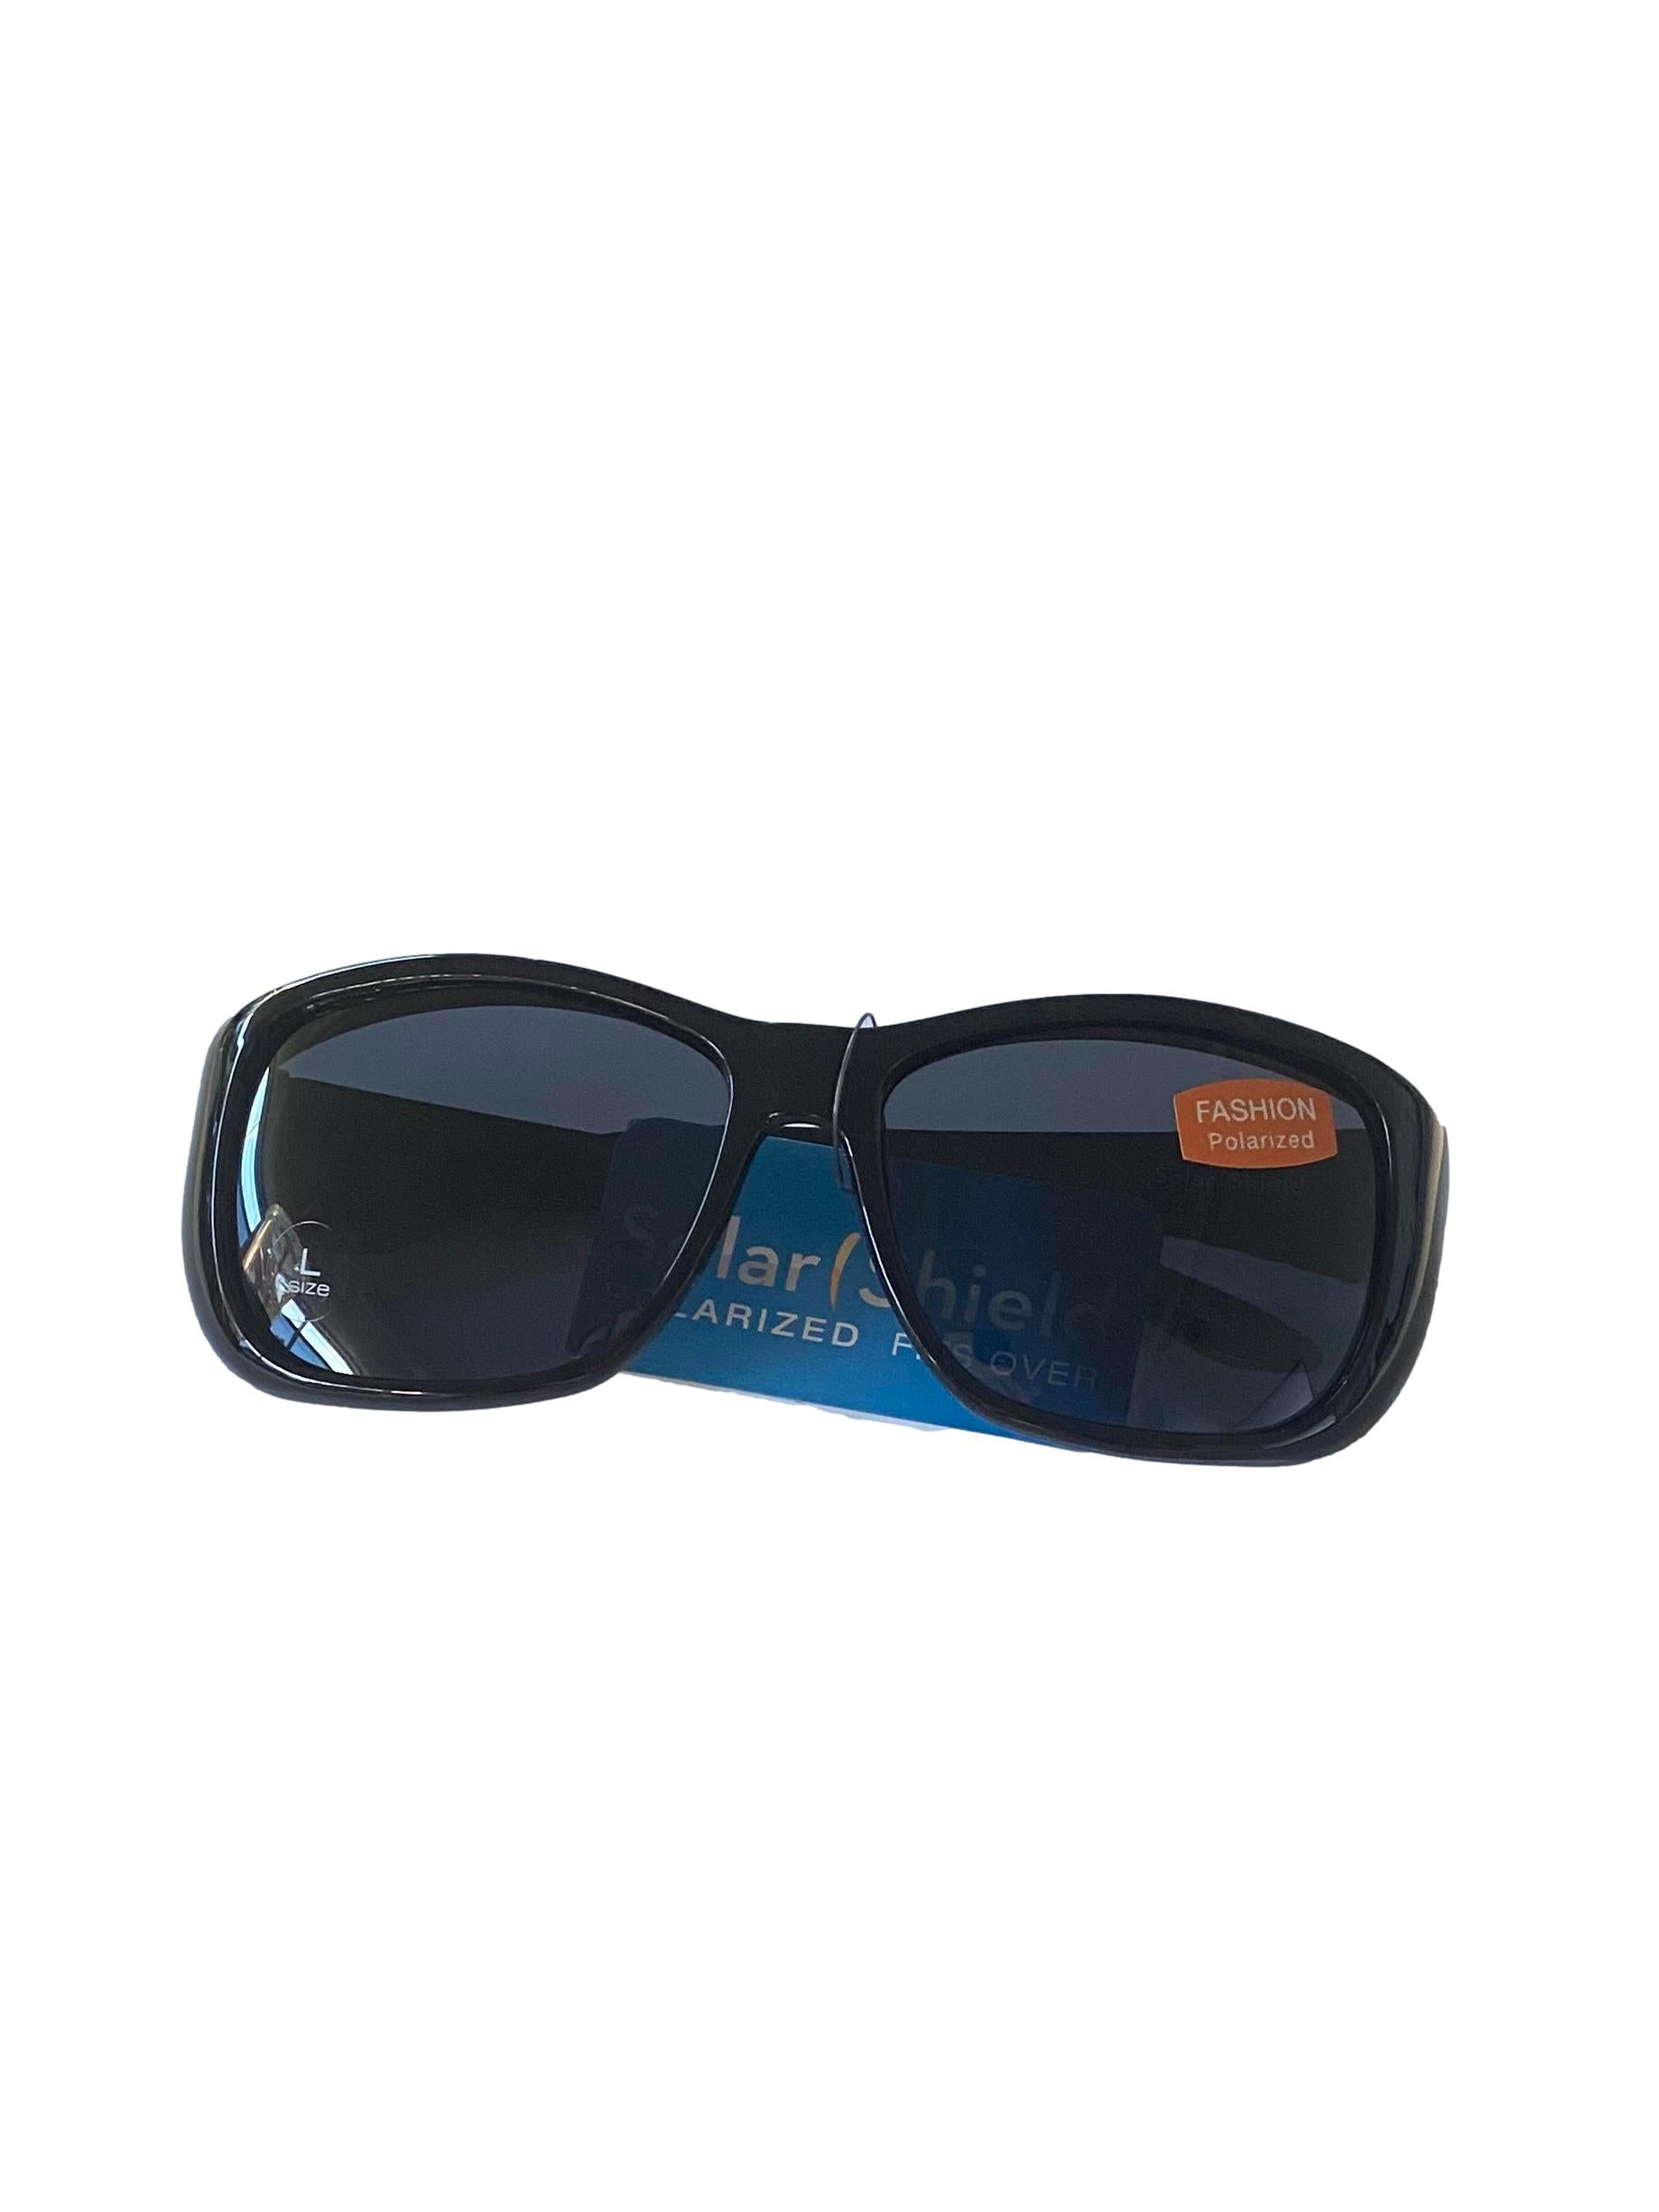 Solar Shield Fits Over FO-031 LG black polarized sunglasses NEW!